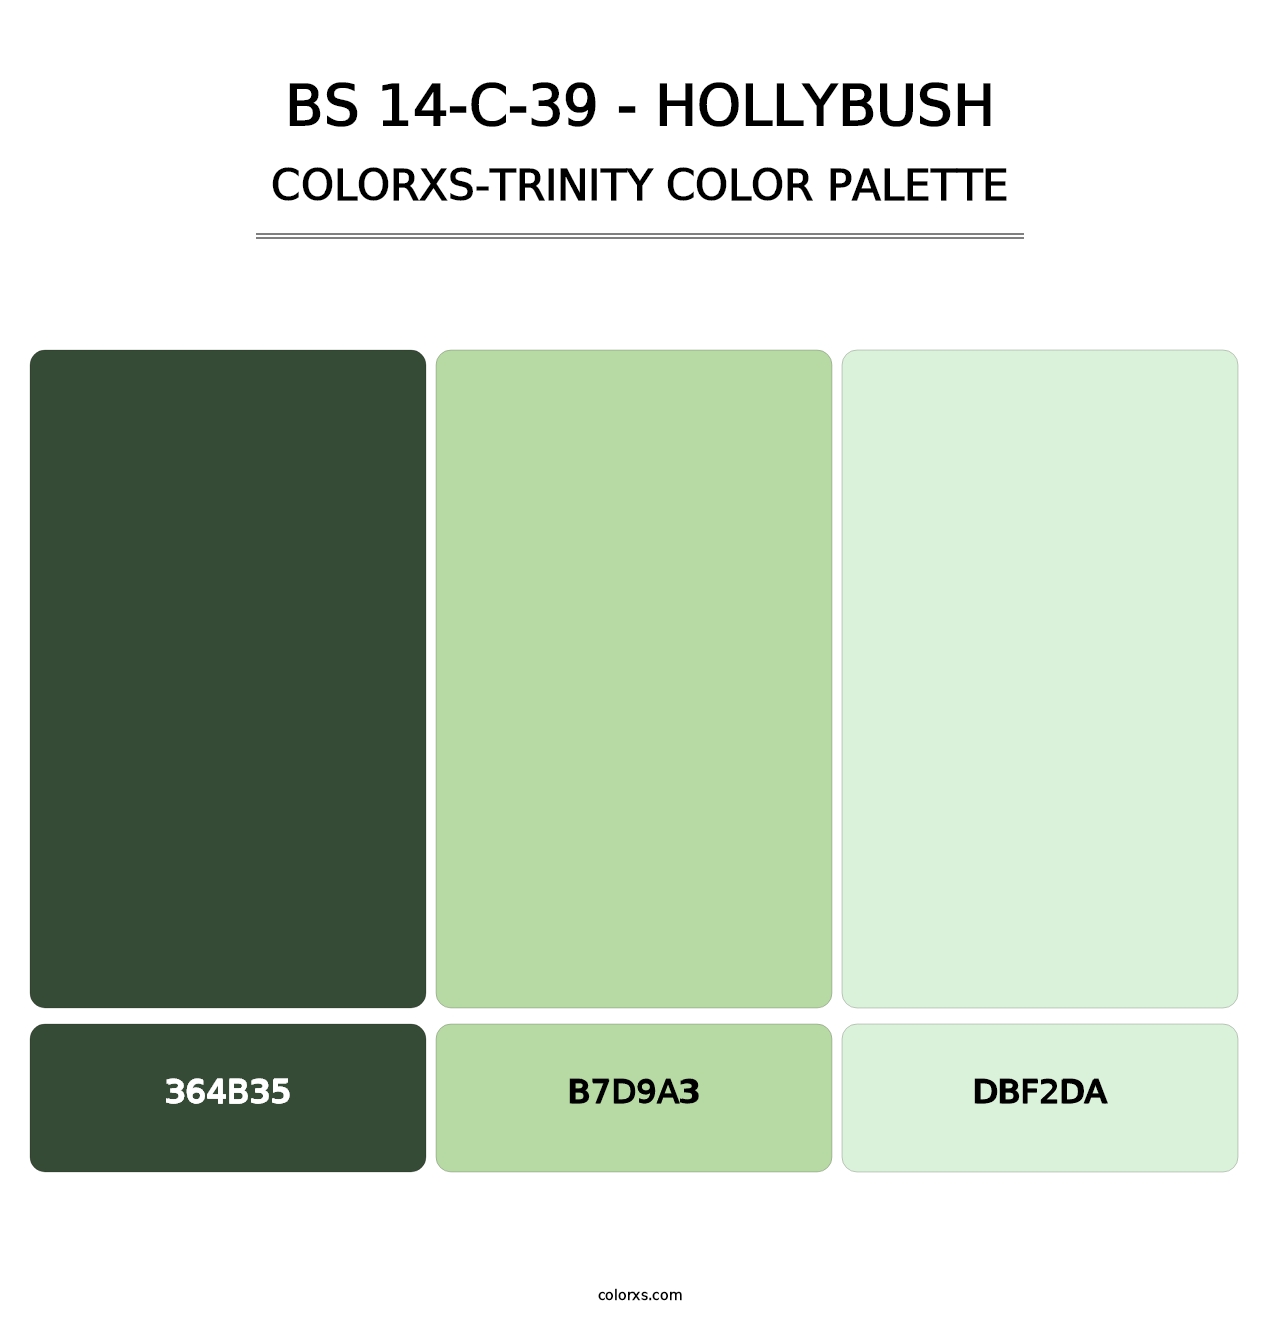 BS 14-C-39 - Hollybush - Colorxs Trinity Palette